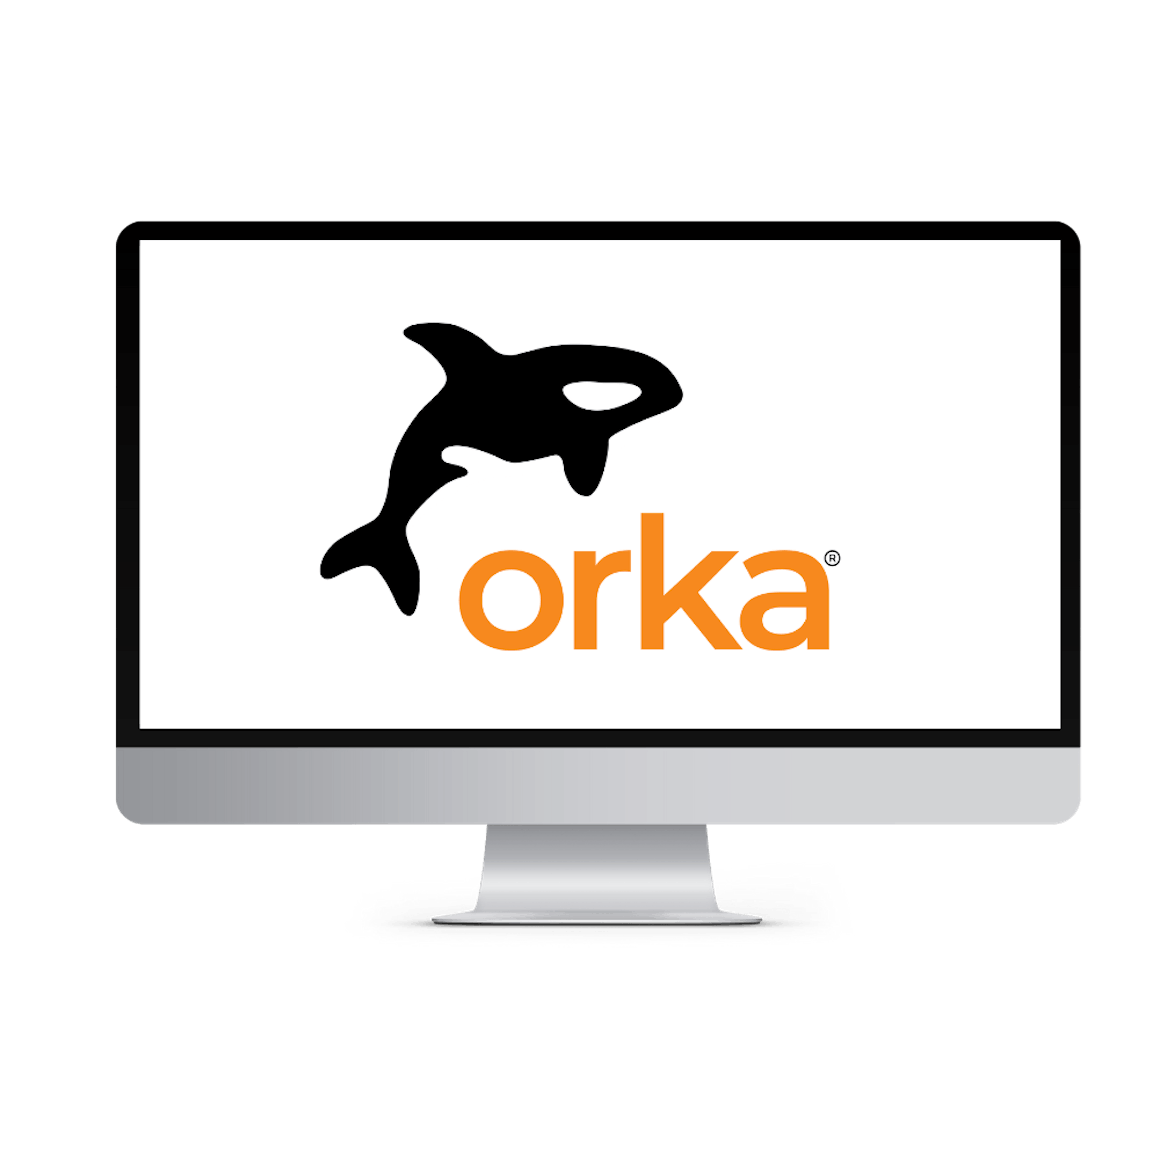 orka-logo-on-imac